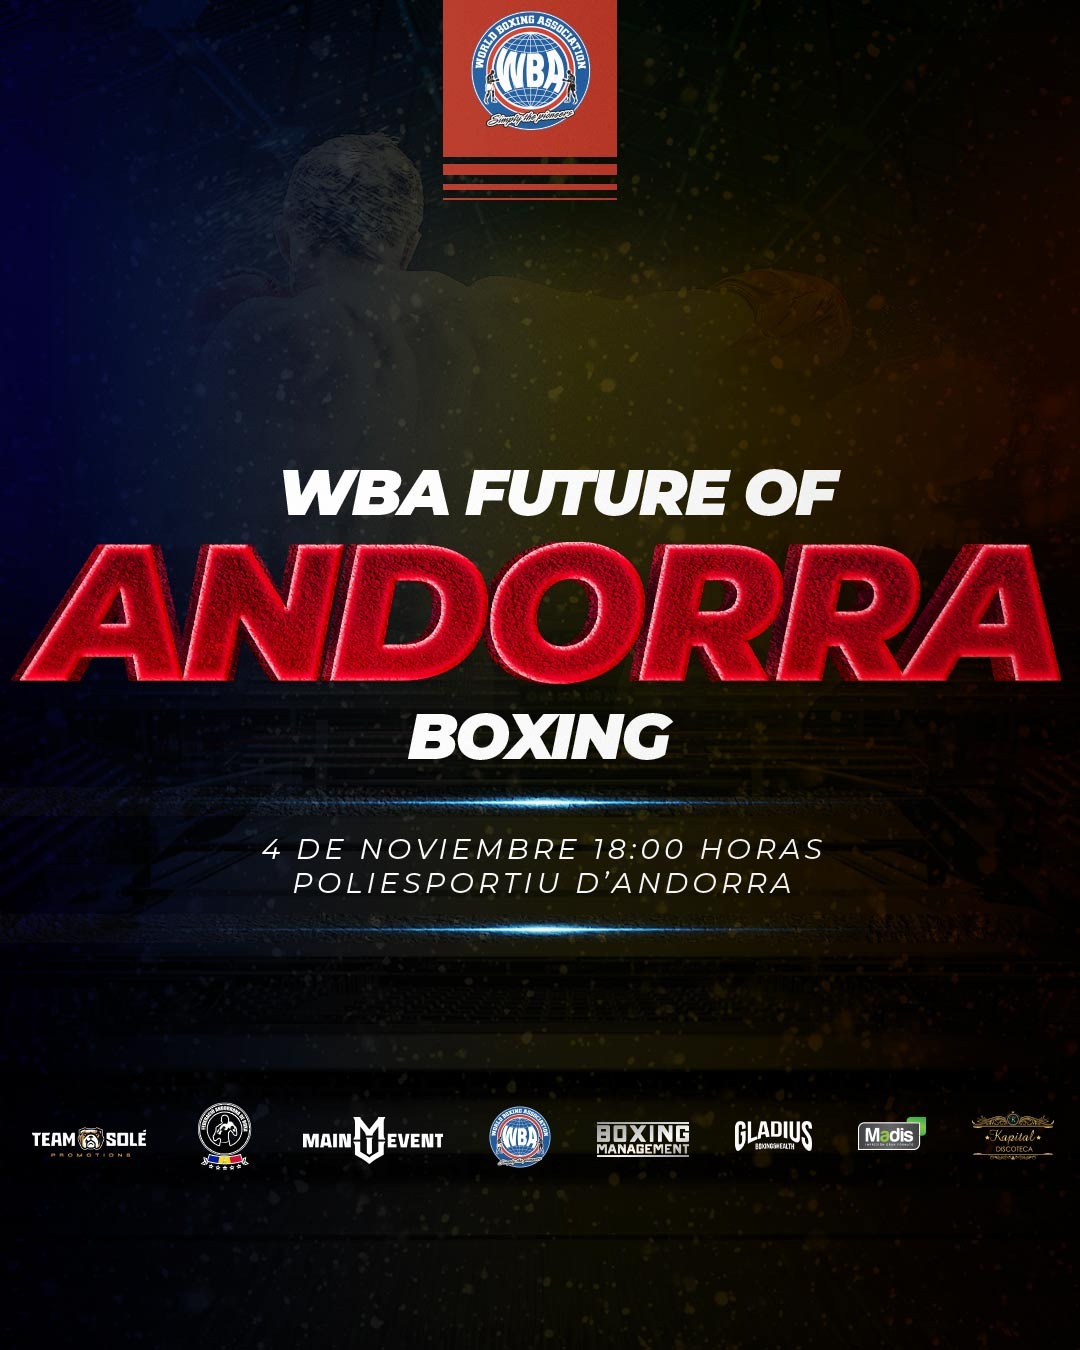 WBA Future Andorra was a success